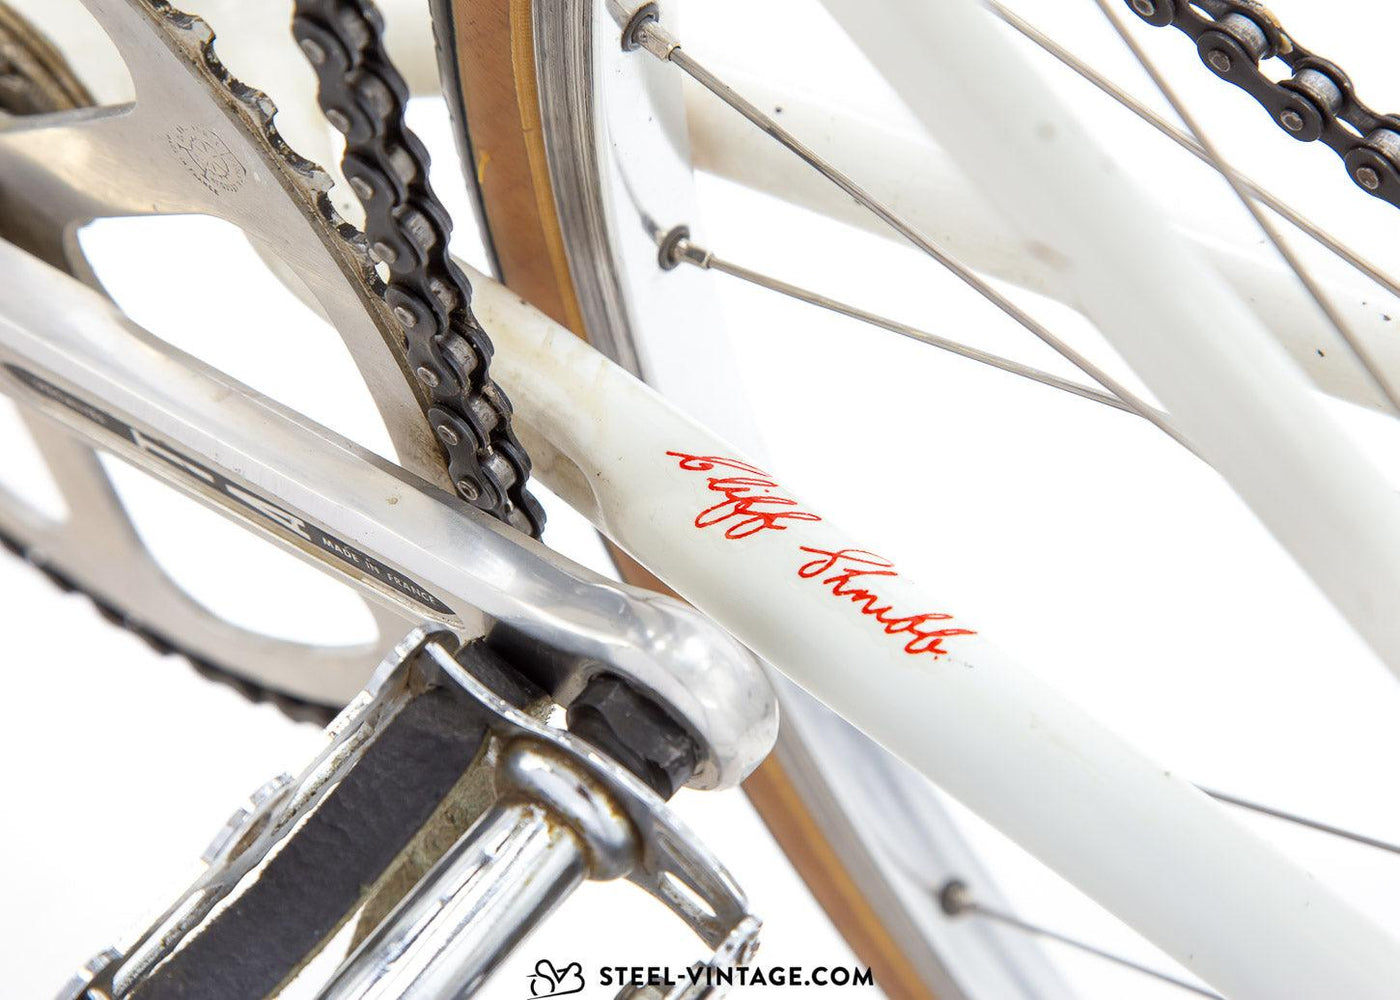 GB Speed Record Bike 1986 - Steel Vintage Bikes